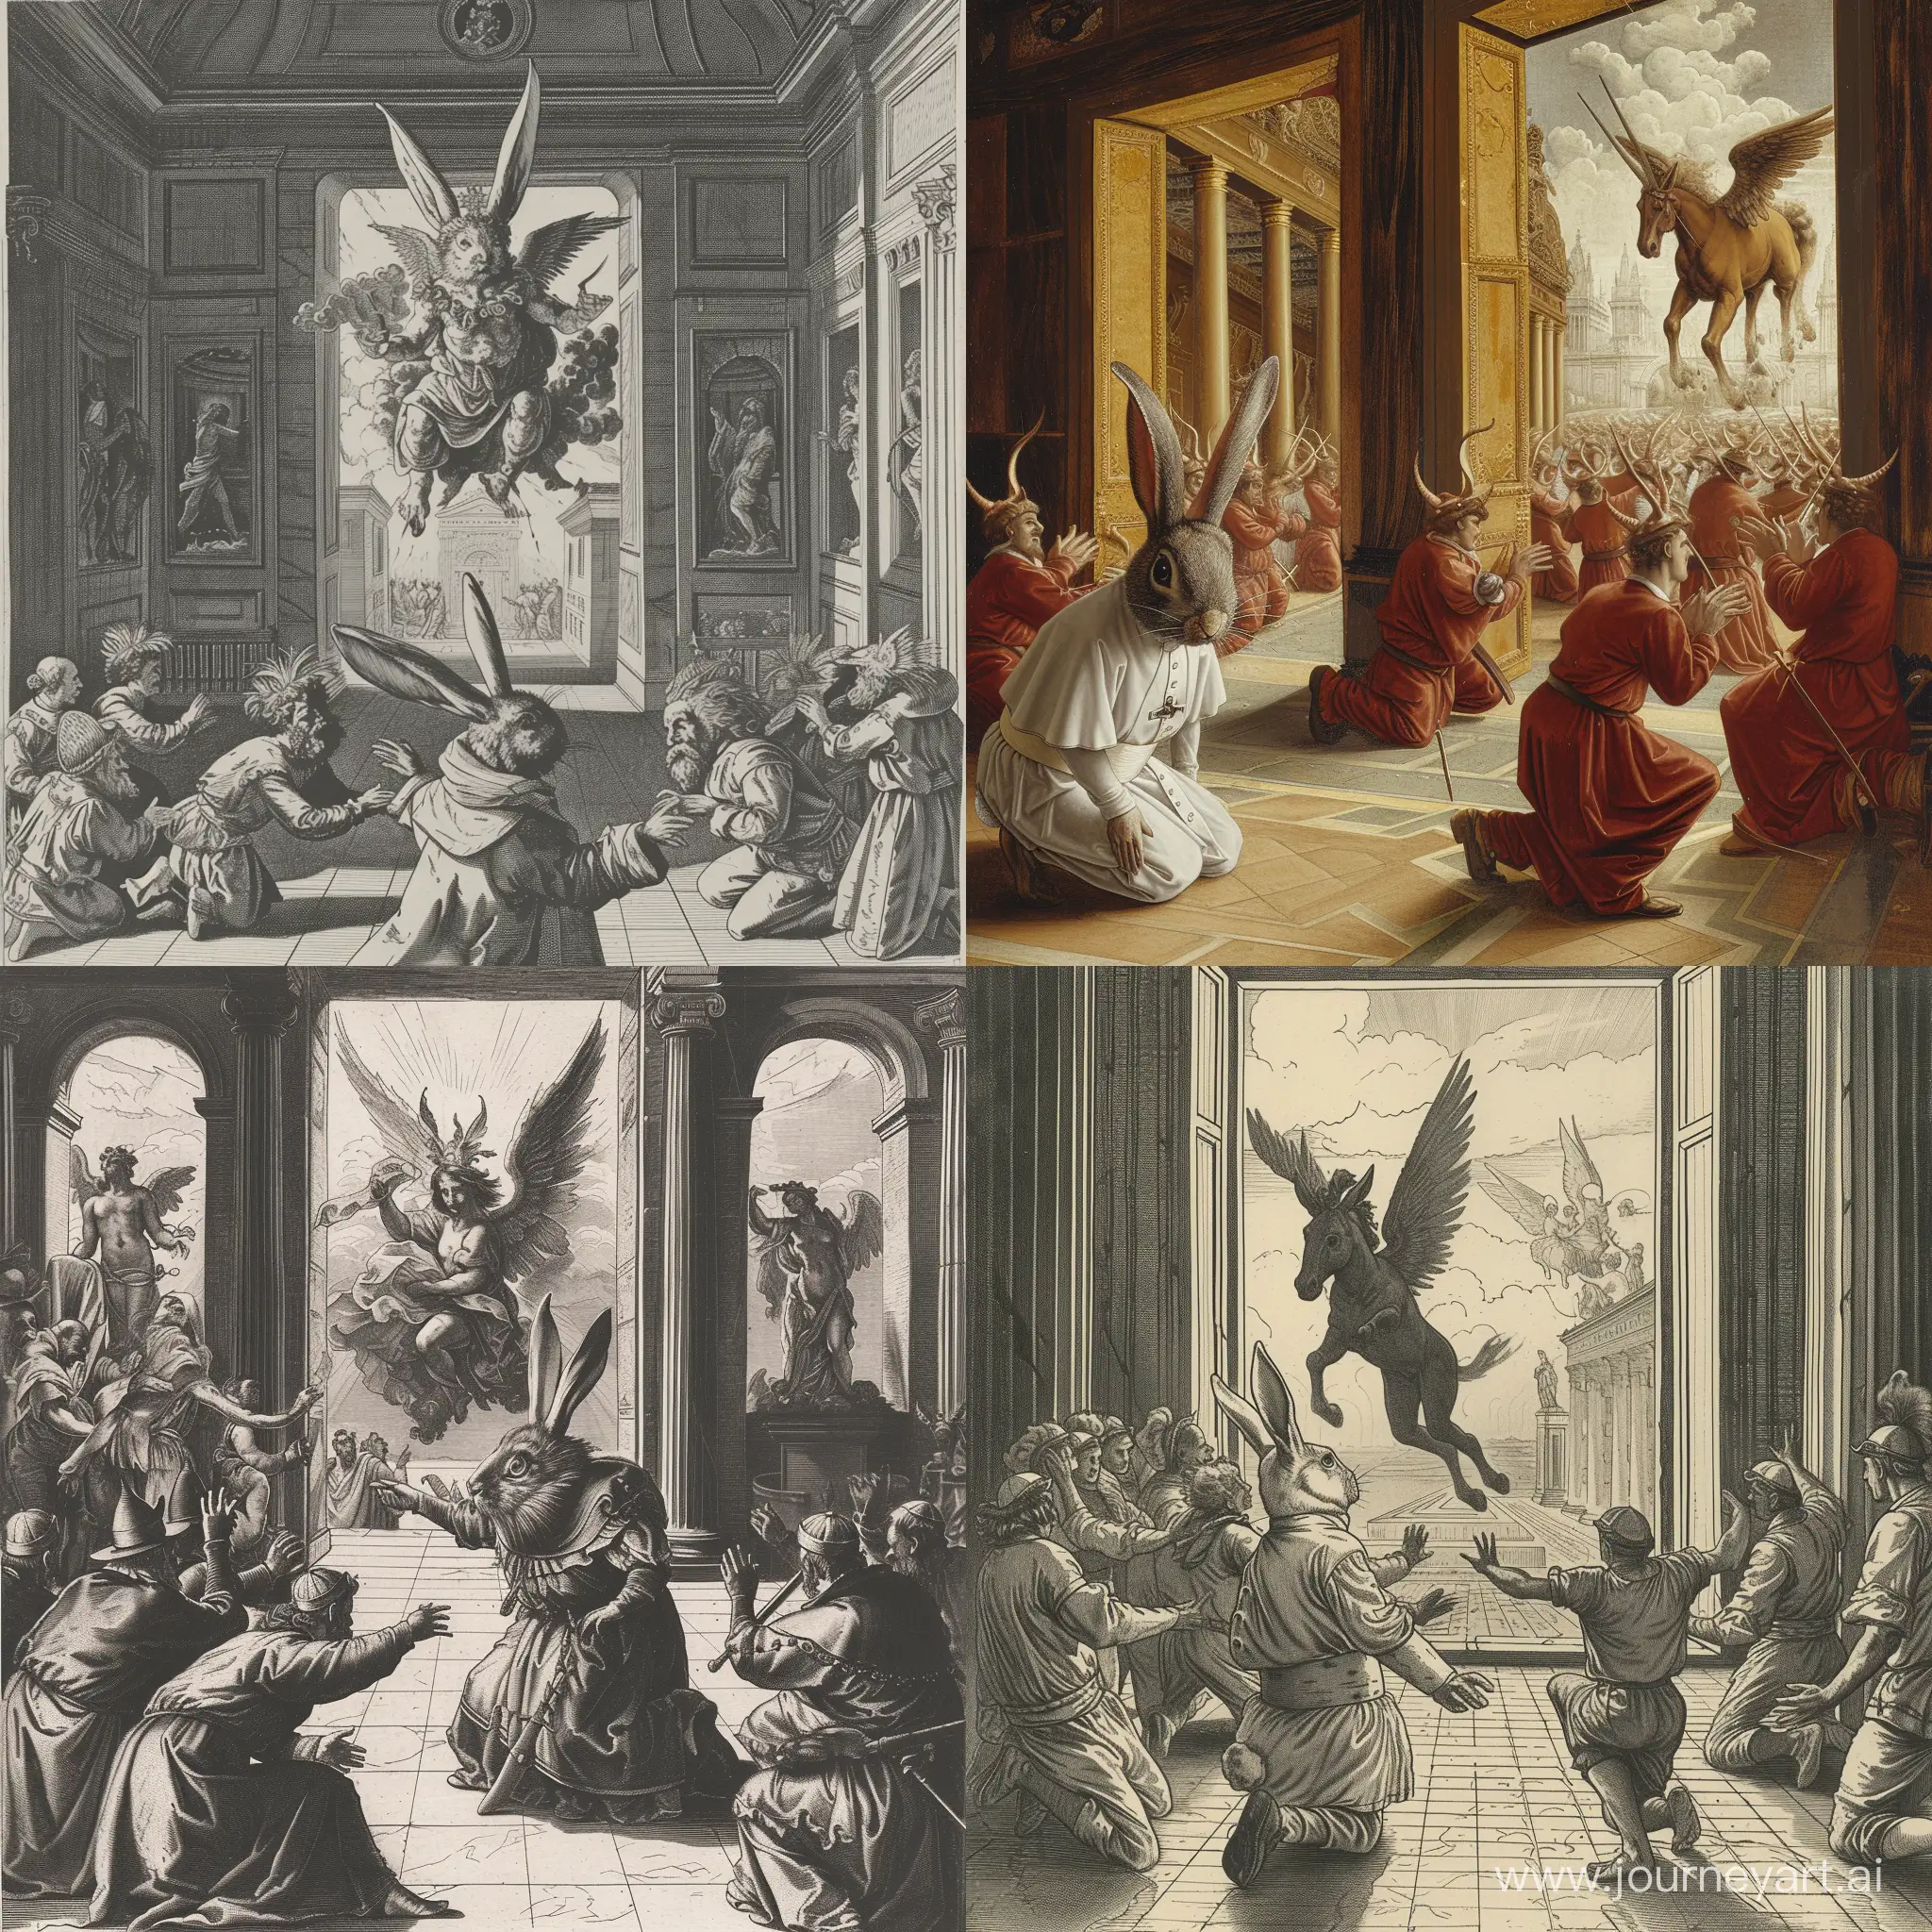 Divine-Rabbit-Pope-and-Surreal-Temple-Scene